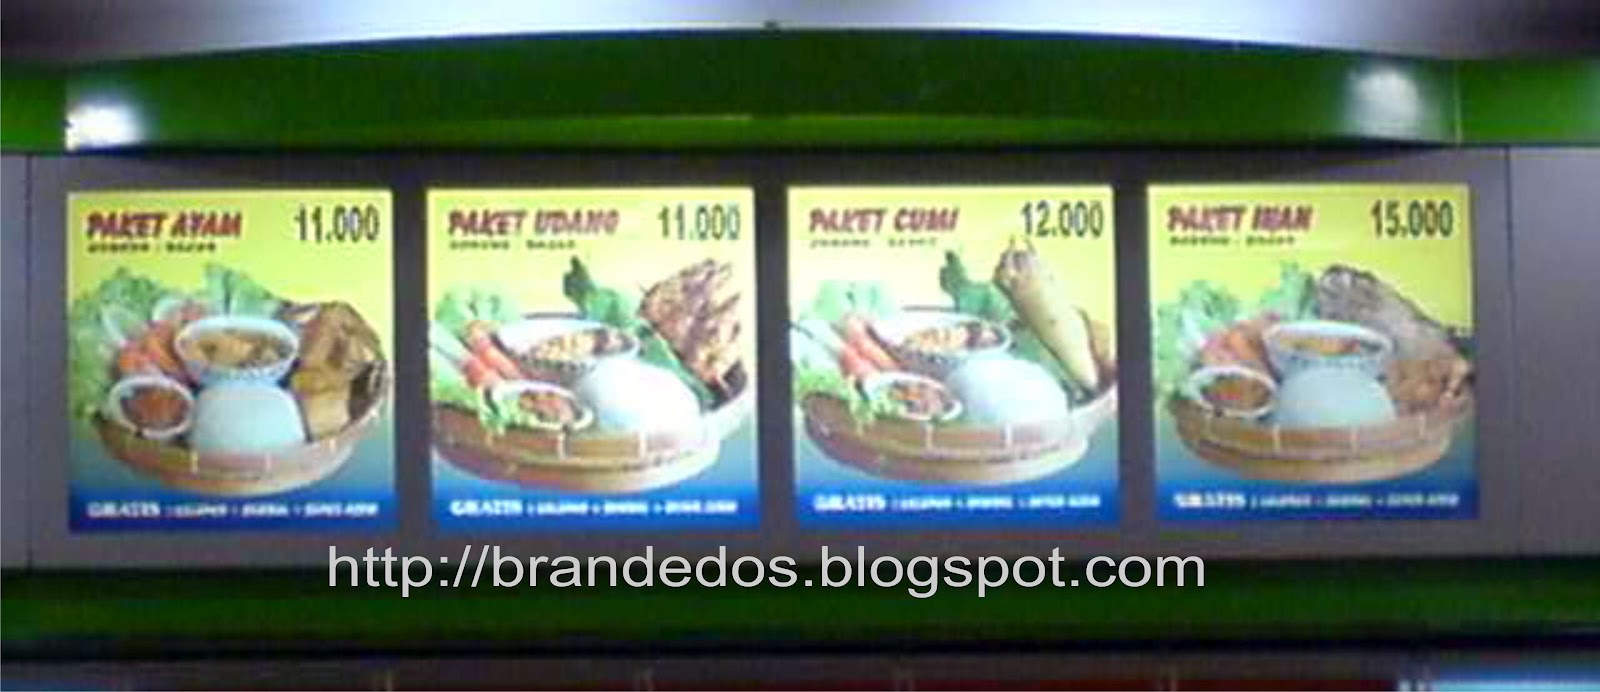 Brandedos Art Boks Delivery Booth Bilboard Poster makanan